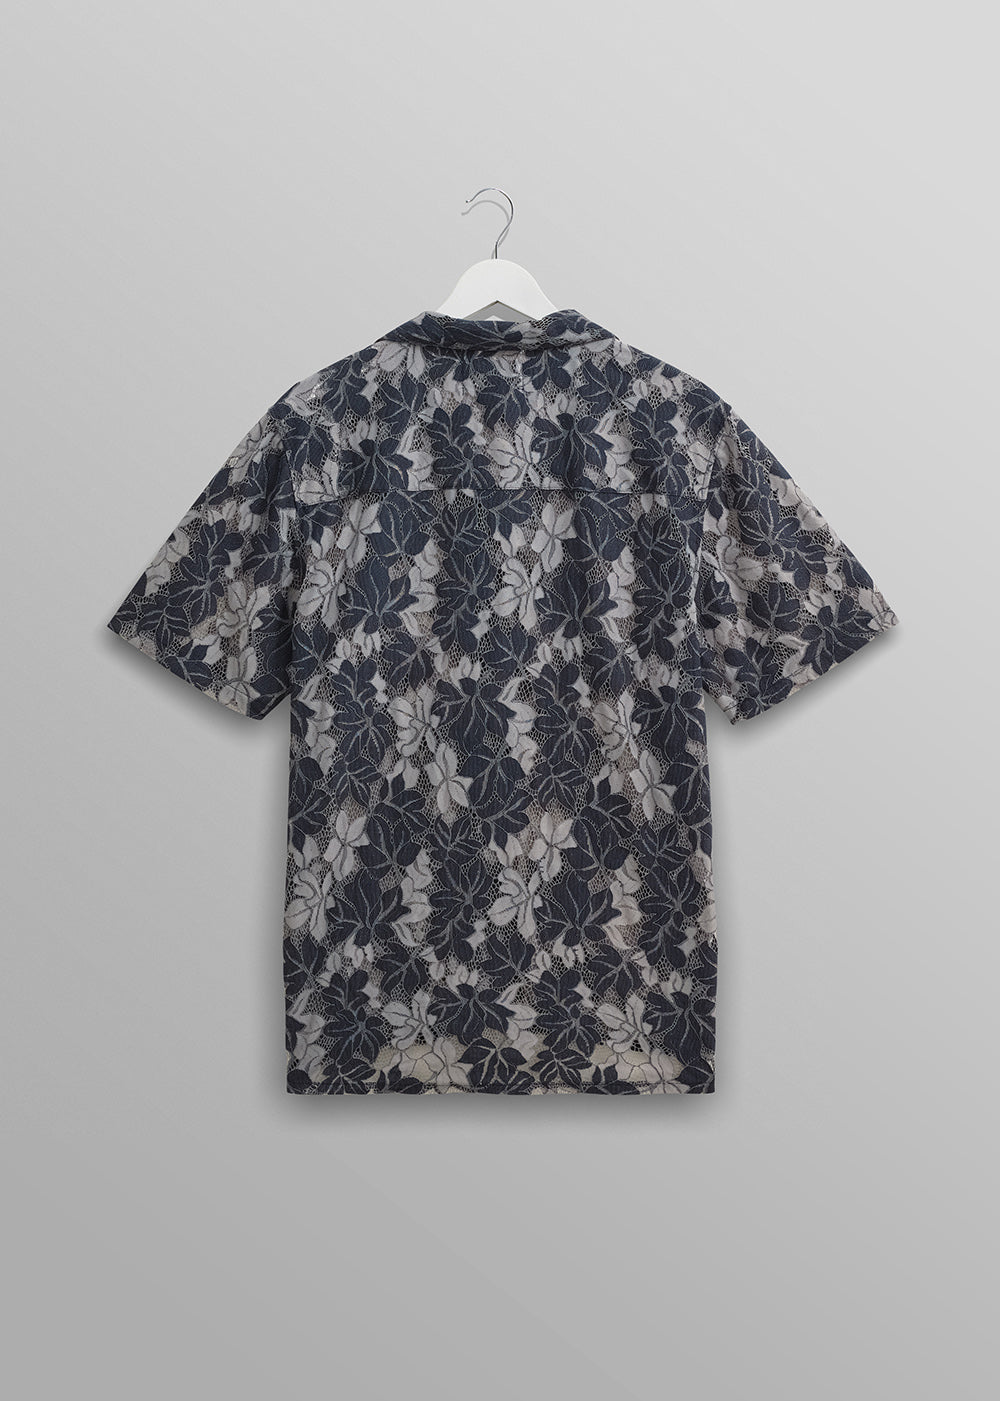 Didcot Shirt Floral Lace - Blue - Wax London - Danali